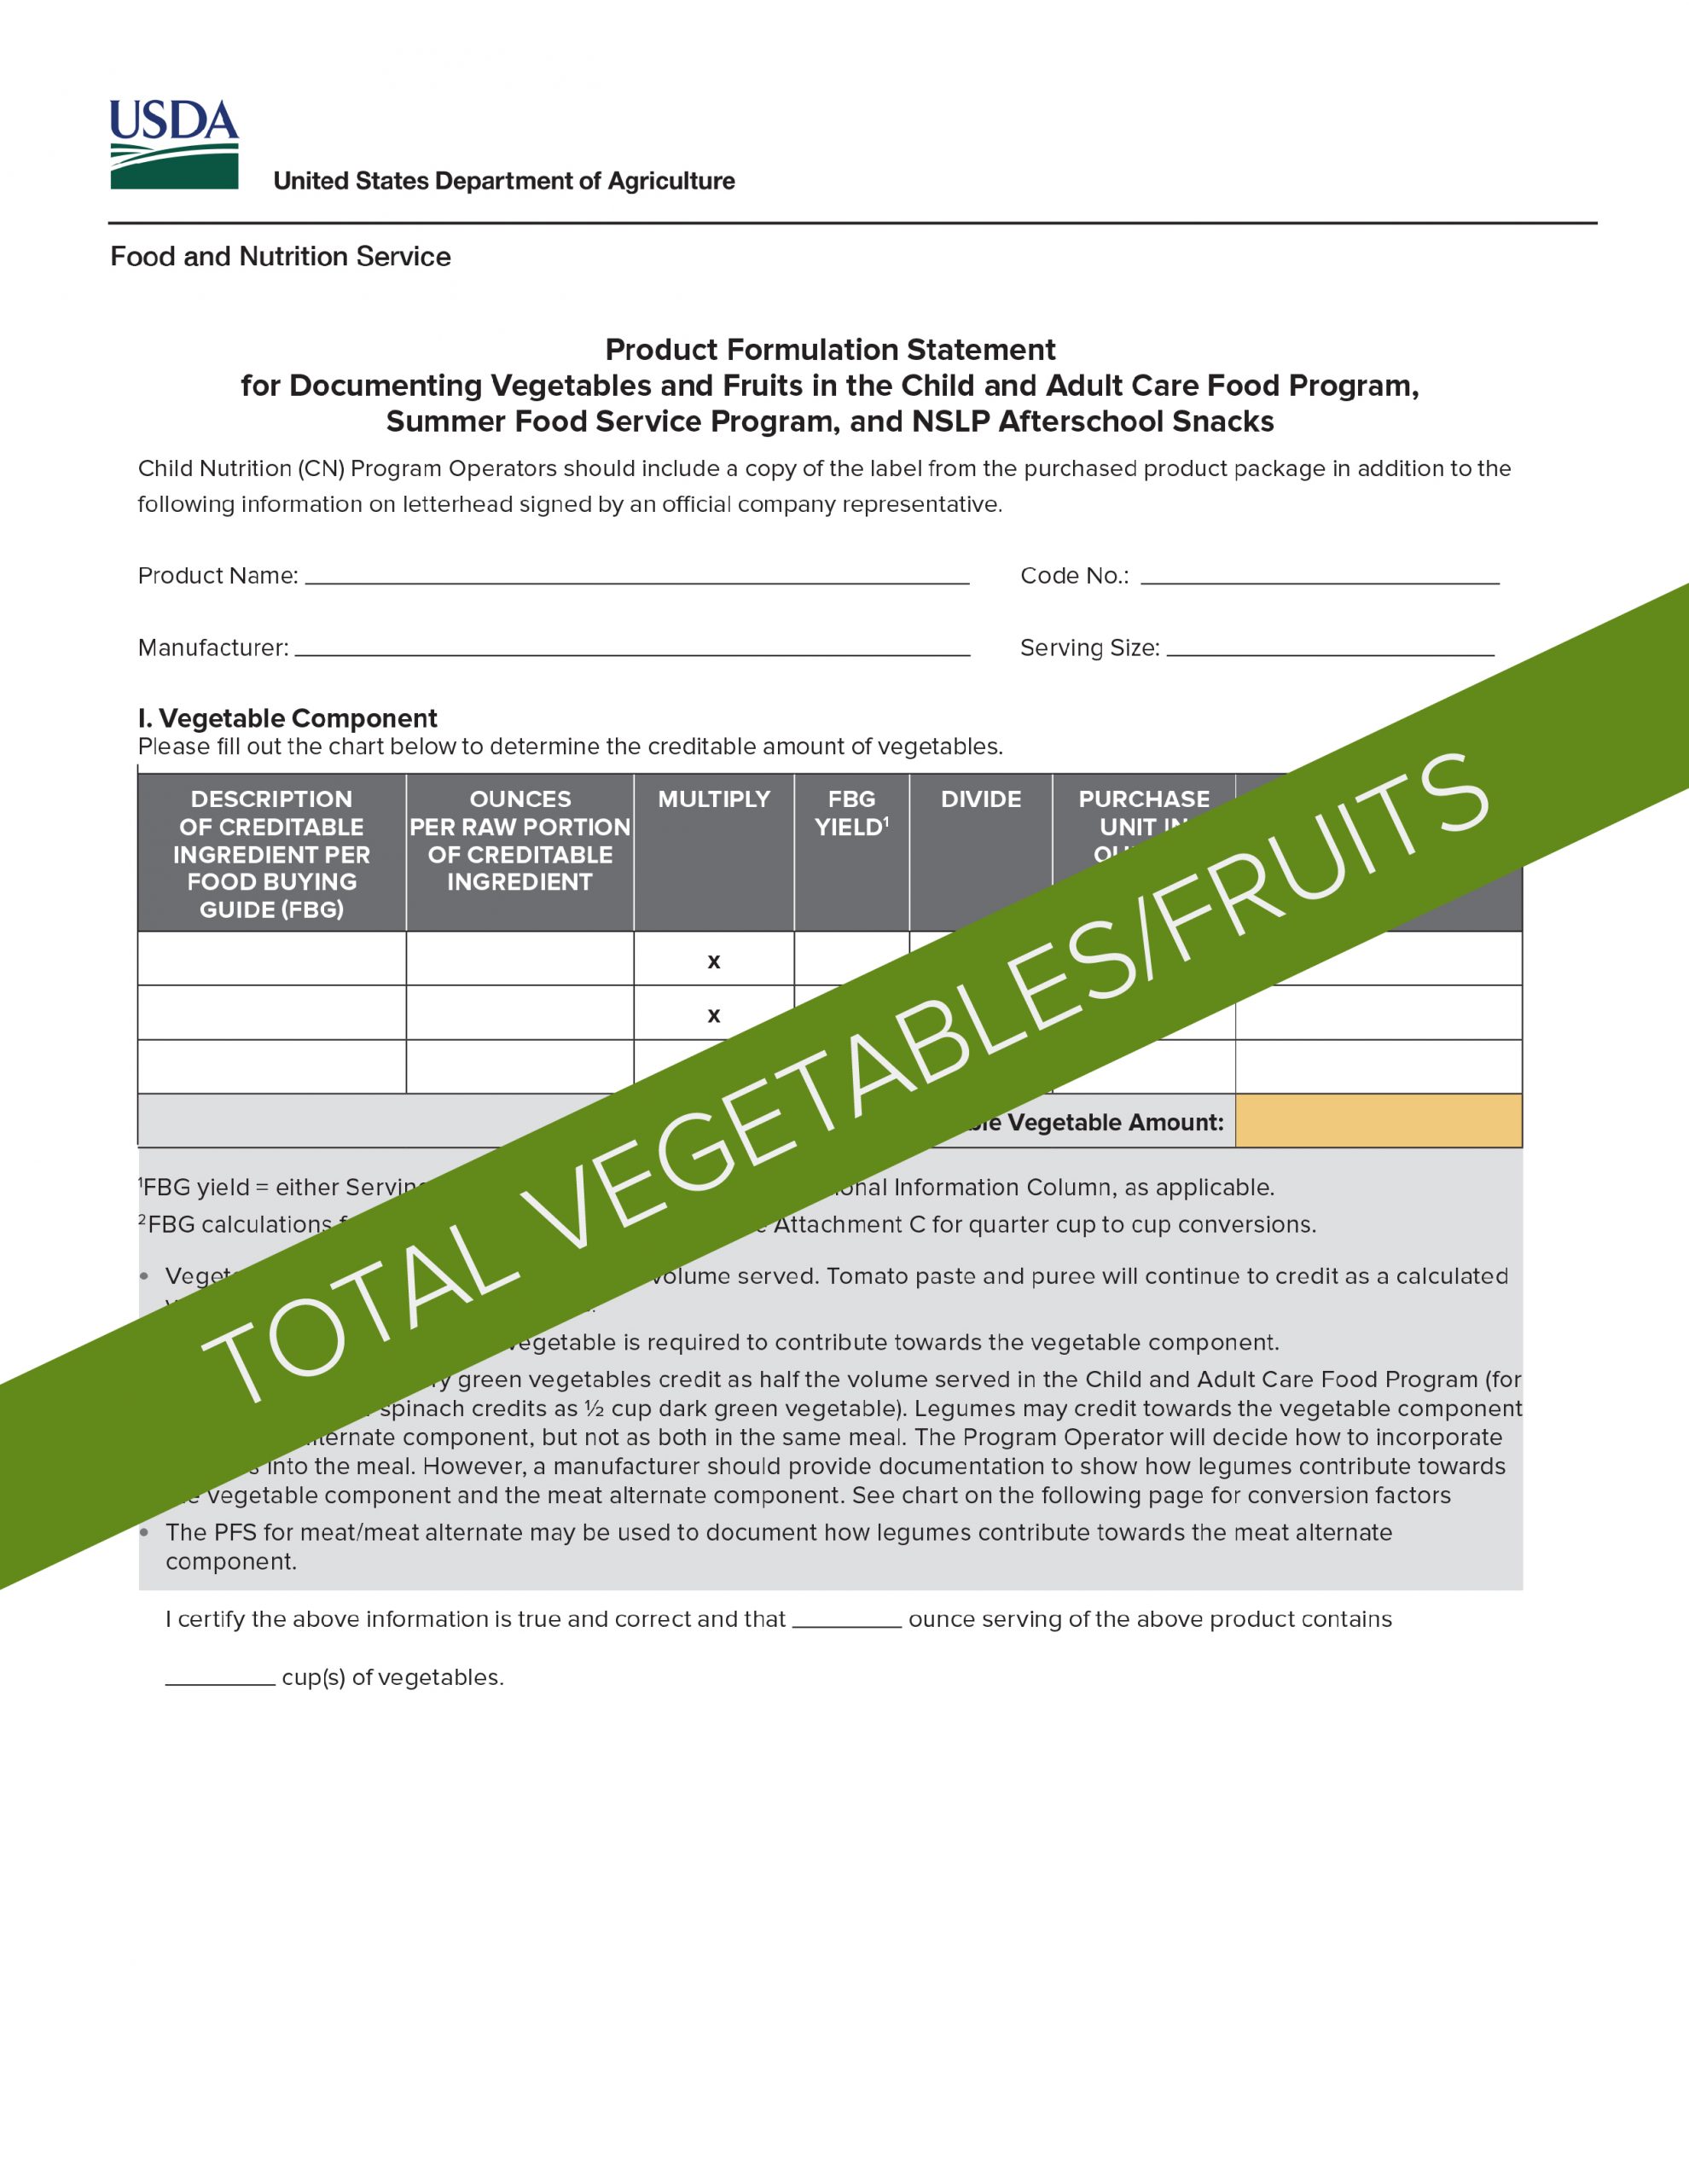 USDA Product Formulation Statement Template for Total Vegetables/Fruits